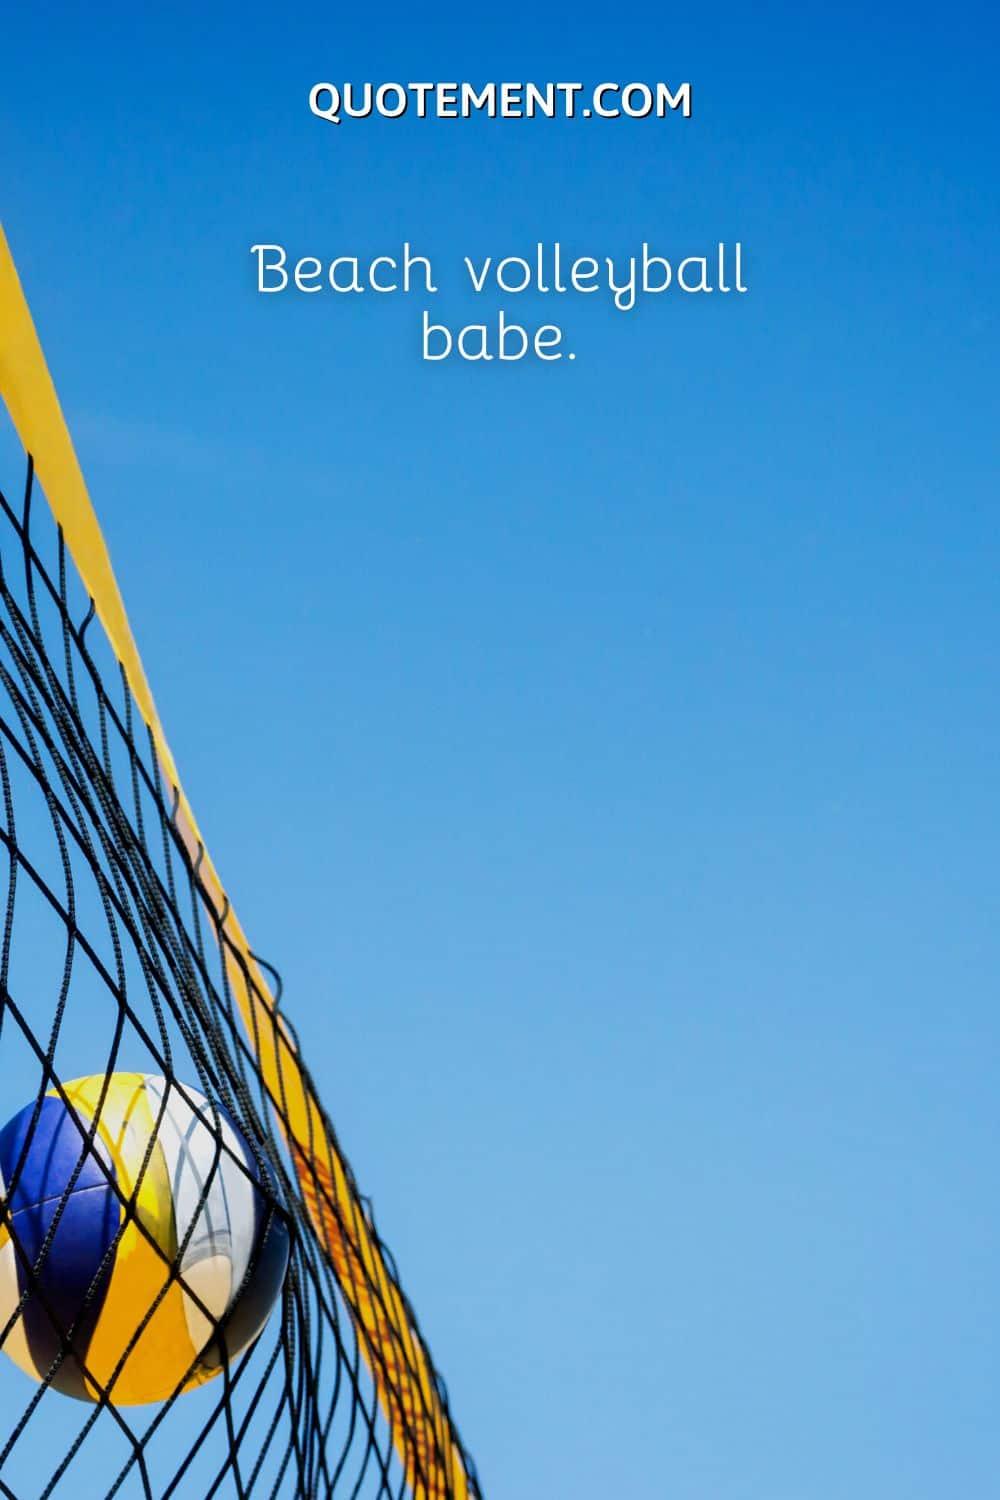 Beach volleyball babe.